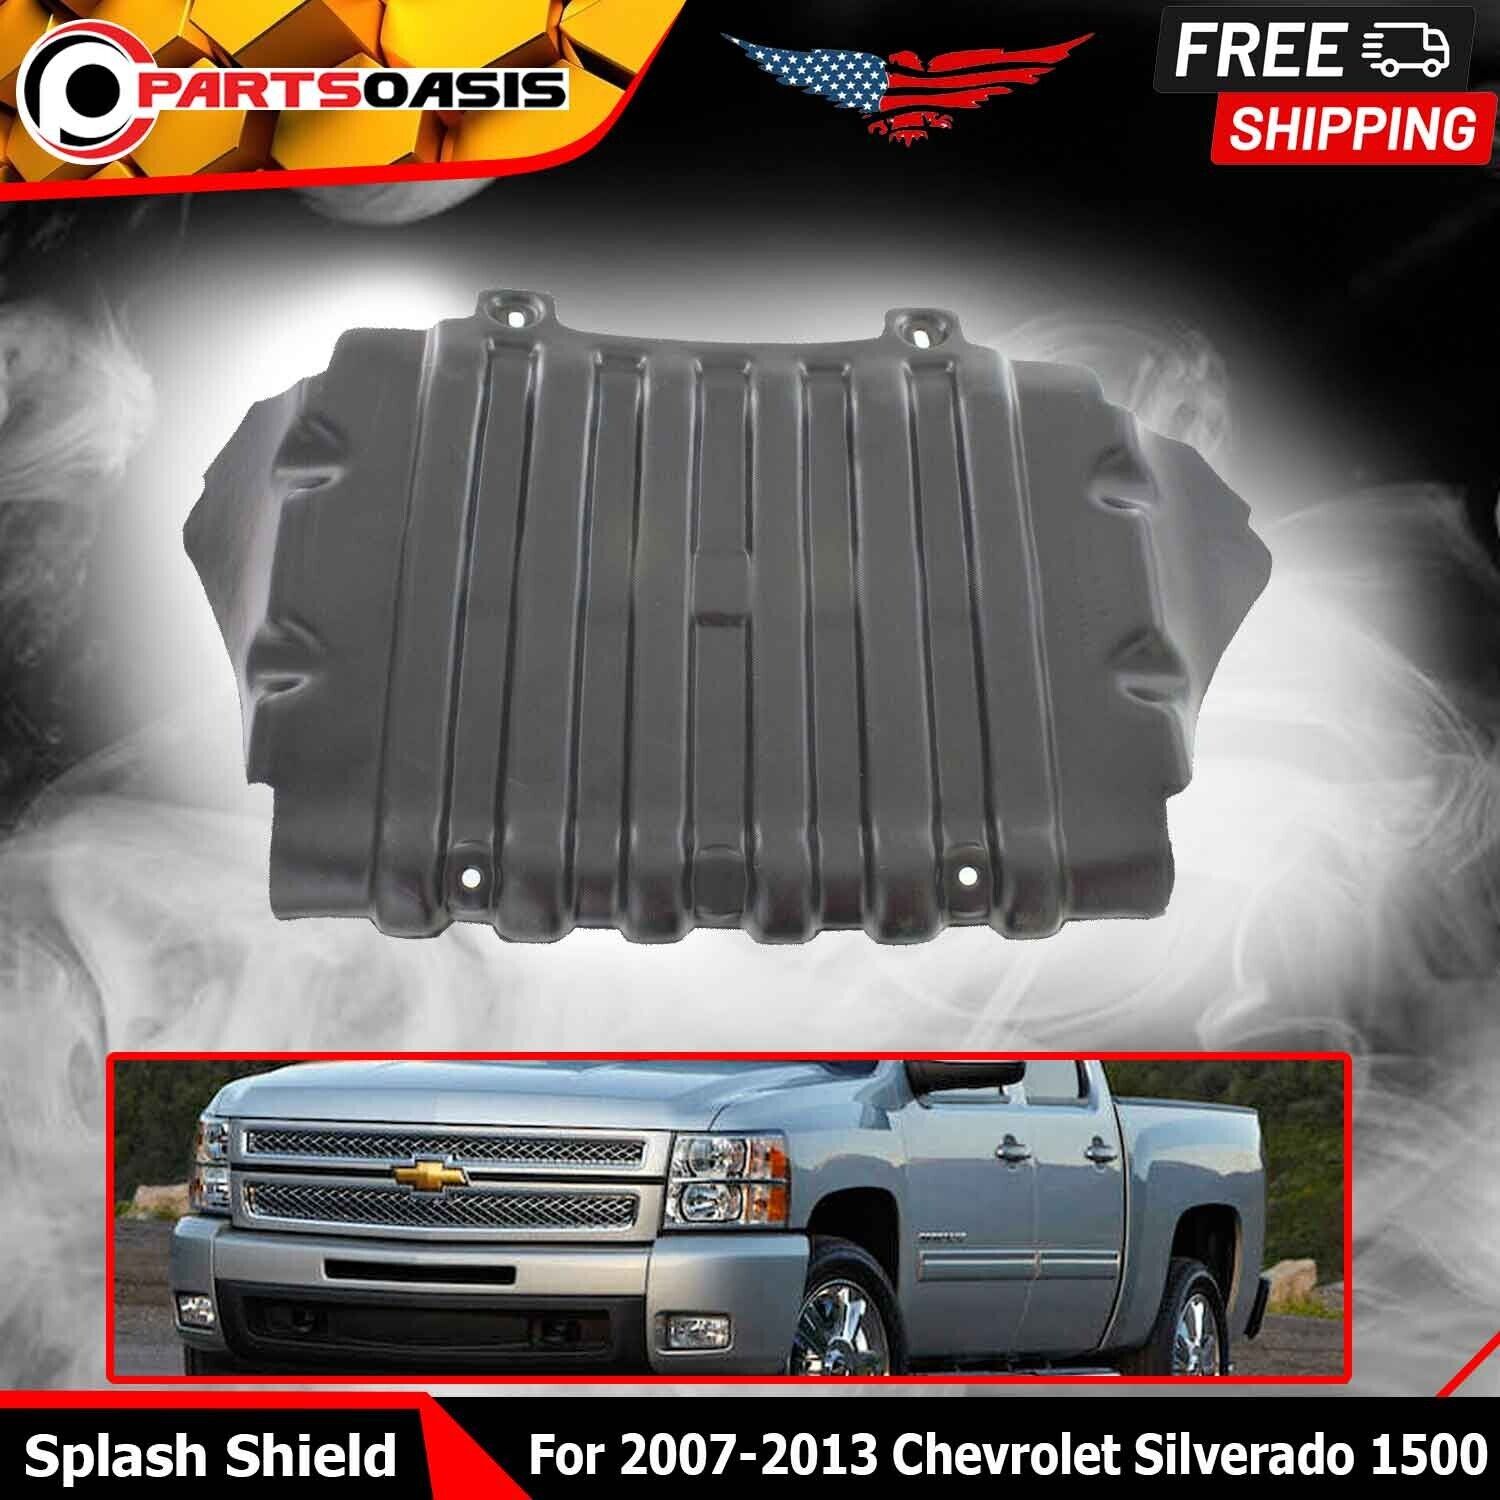 New Front Engine Splash Shield For 2007-2013 Chevrolet Silverado 1500 GM1228139